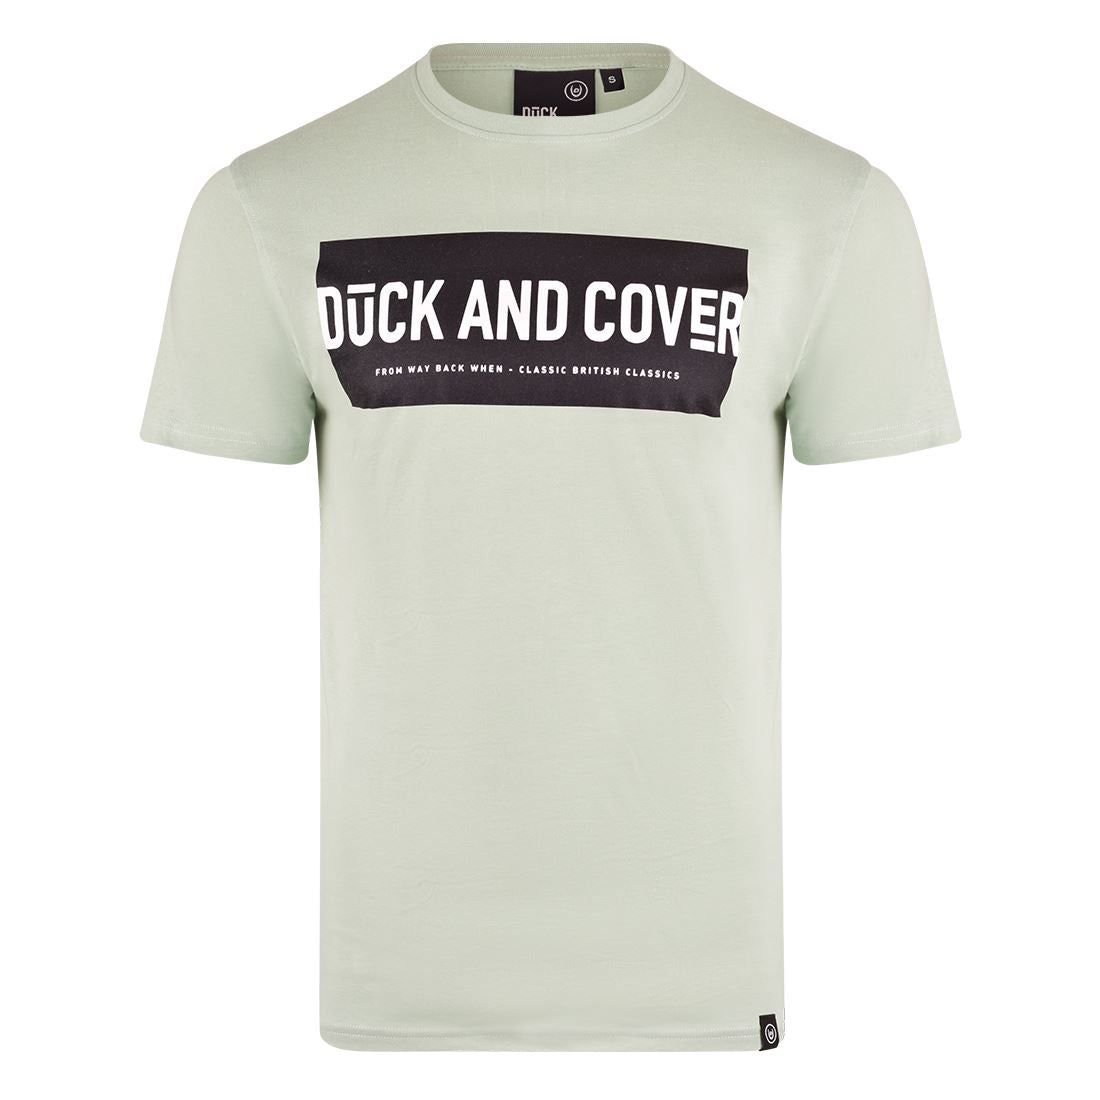 Duck and Cover Designer Mens Signature Logo Designer Short Sleeved T-Shirt Top